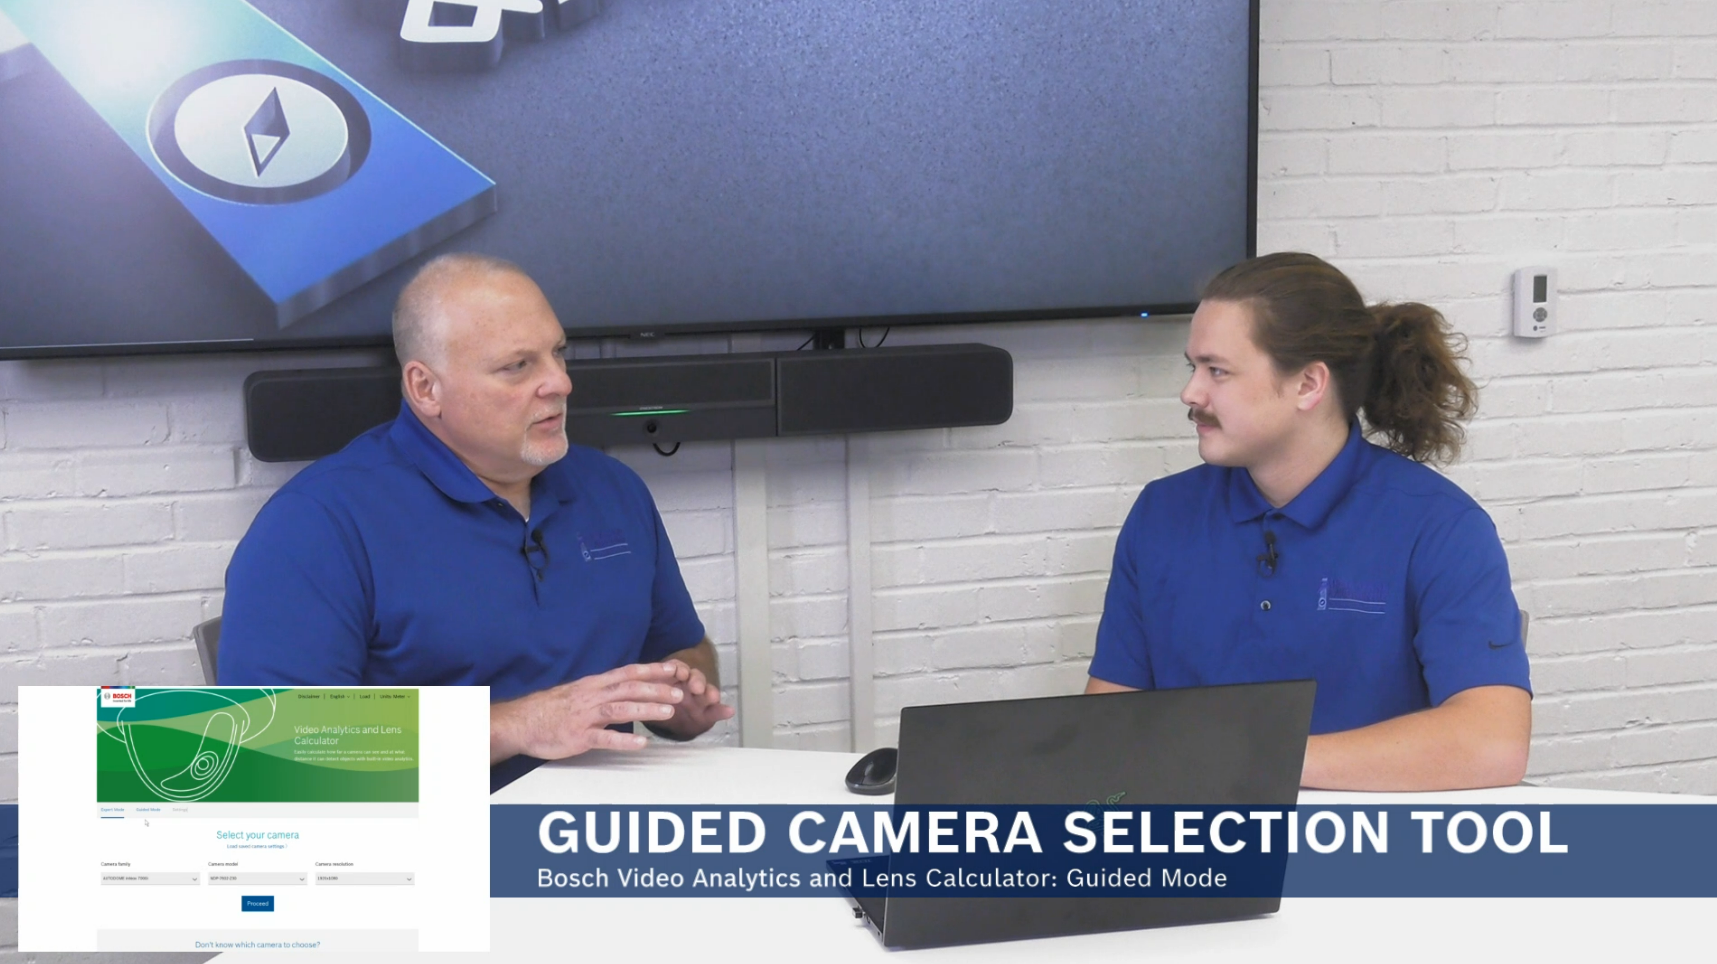 Camera selection calculator tool - guided mode thumbnail